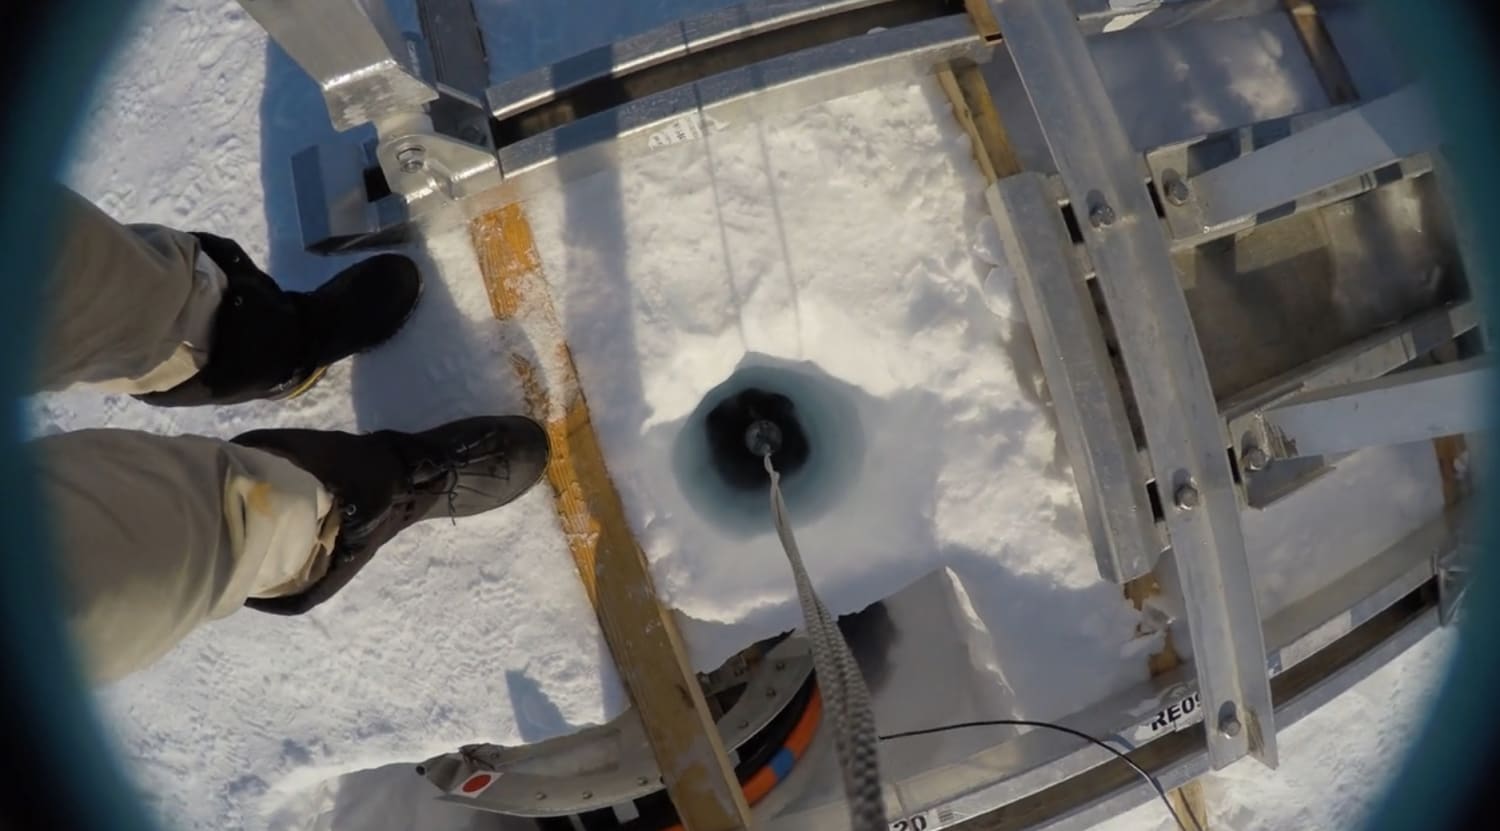 BREAKING: Scientists Find Disturbing New Discovery Beneath Antarctic Ice Shelf